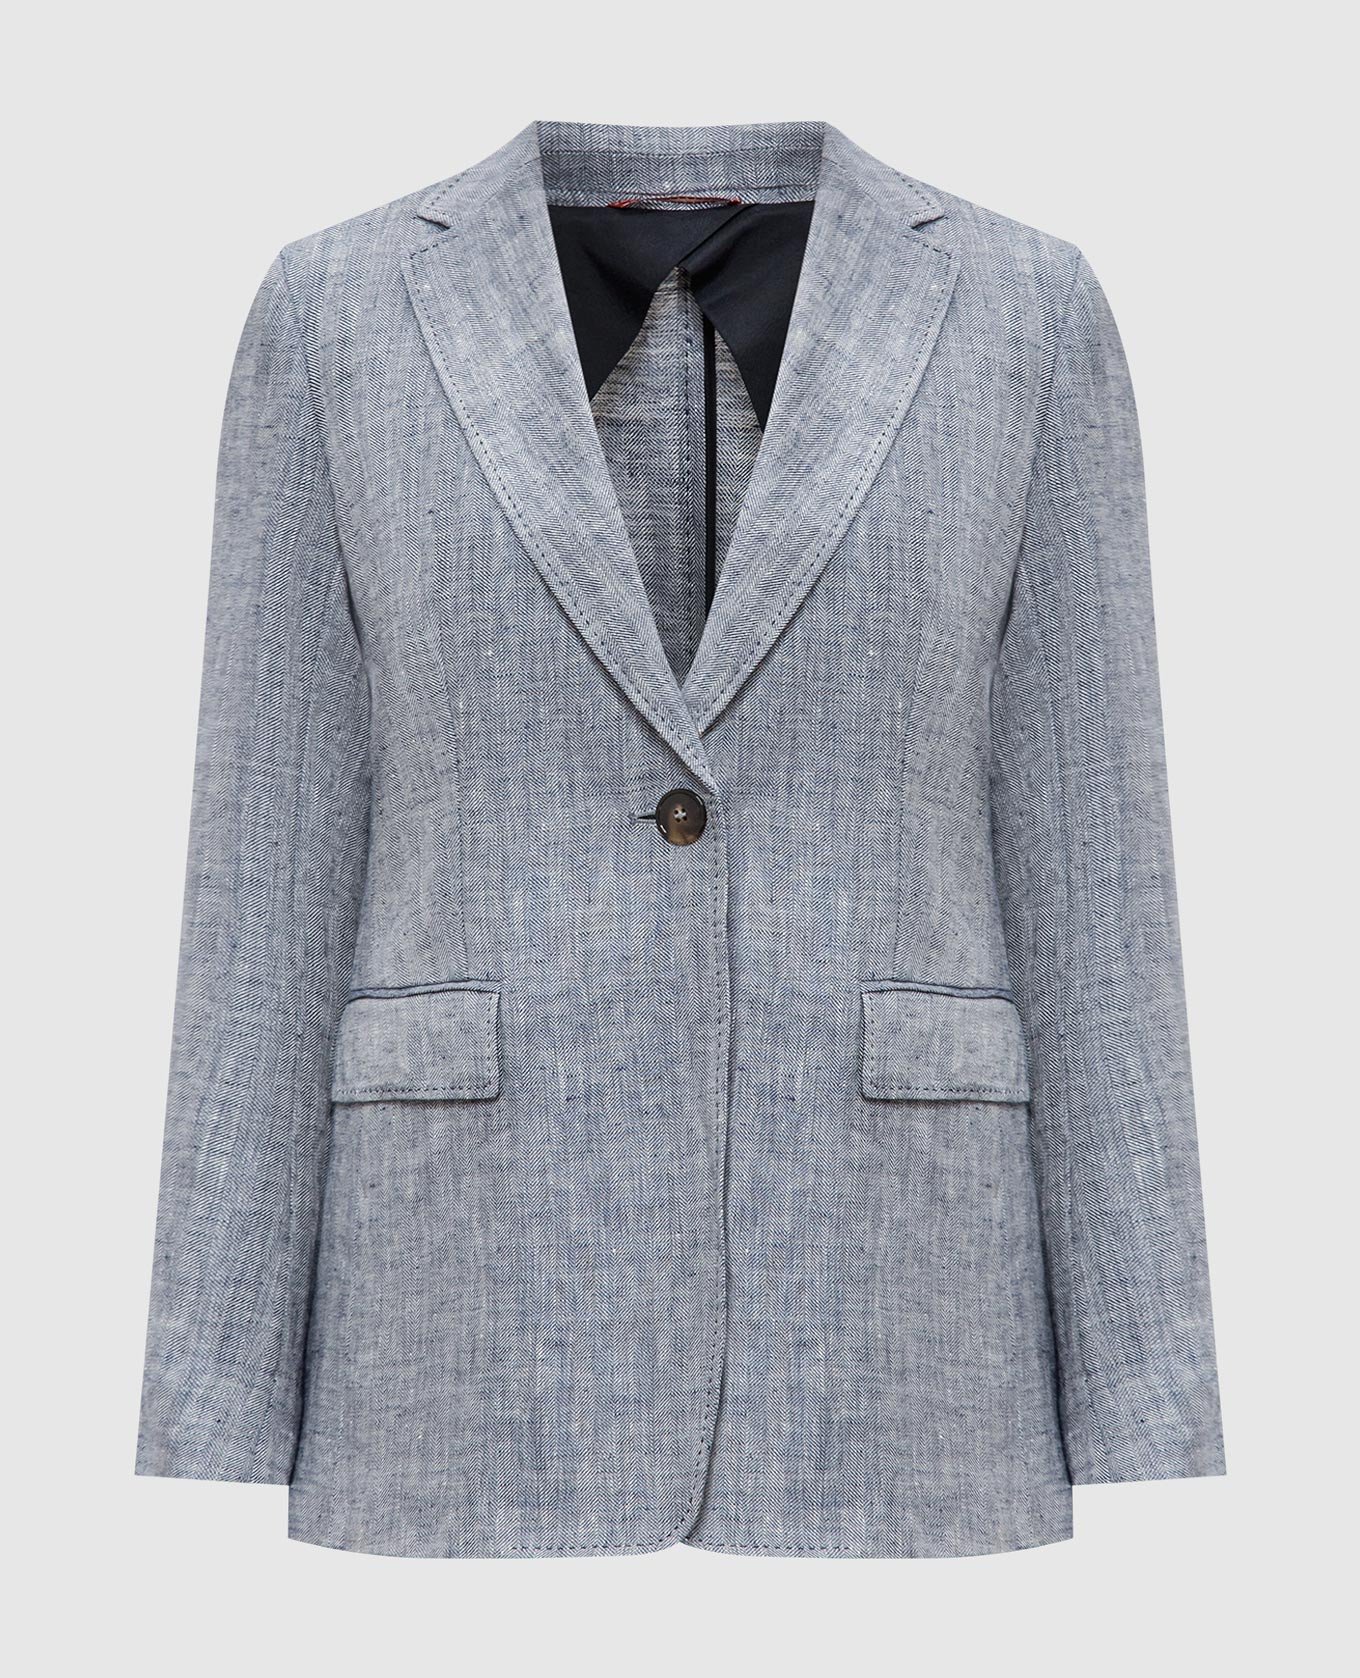 Blue PALAU jacket made of linen